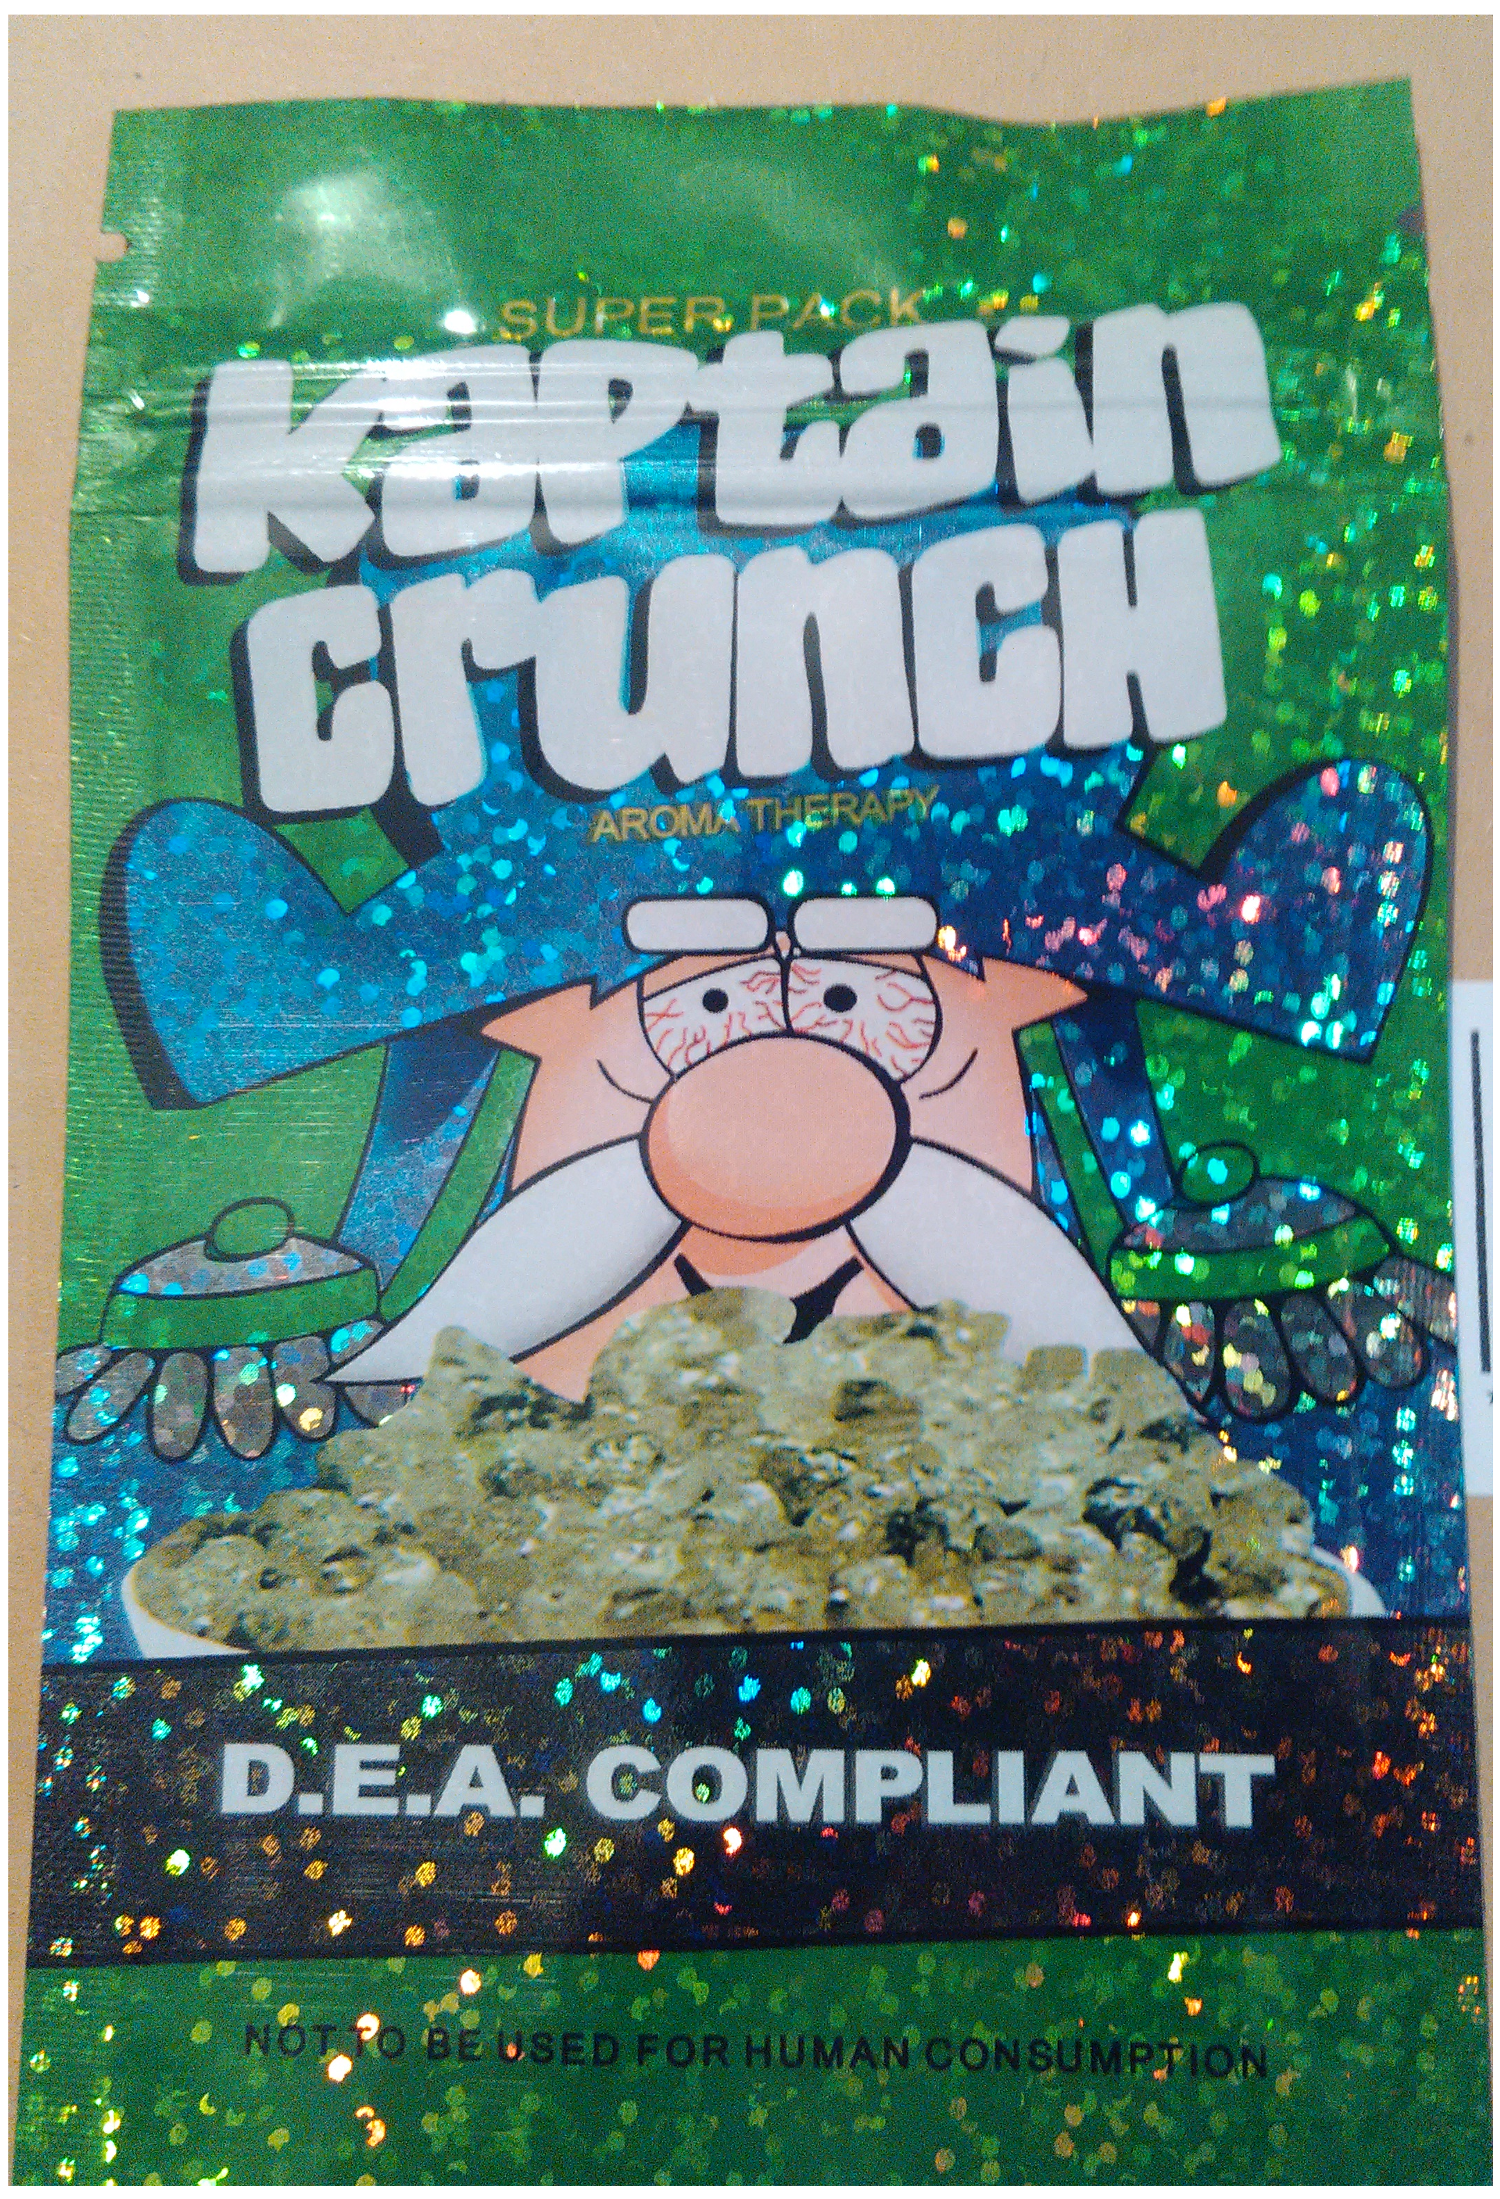 Kaptain Crunch legal high reivew